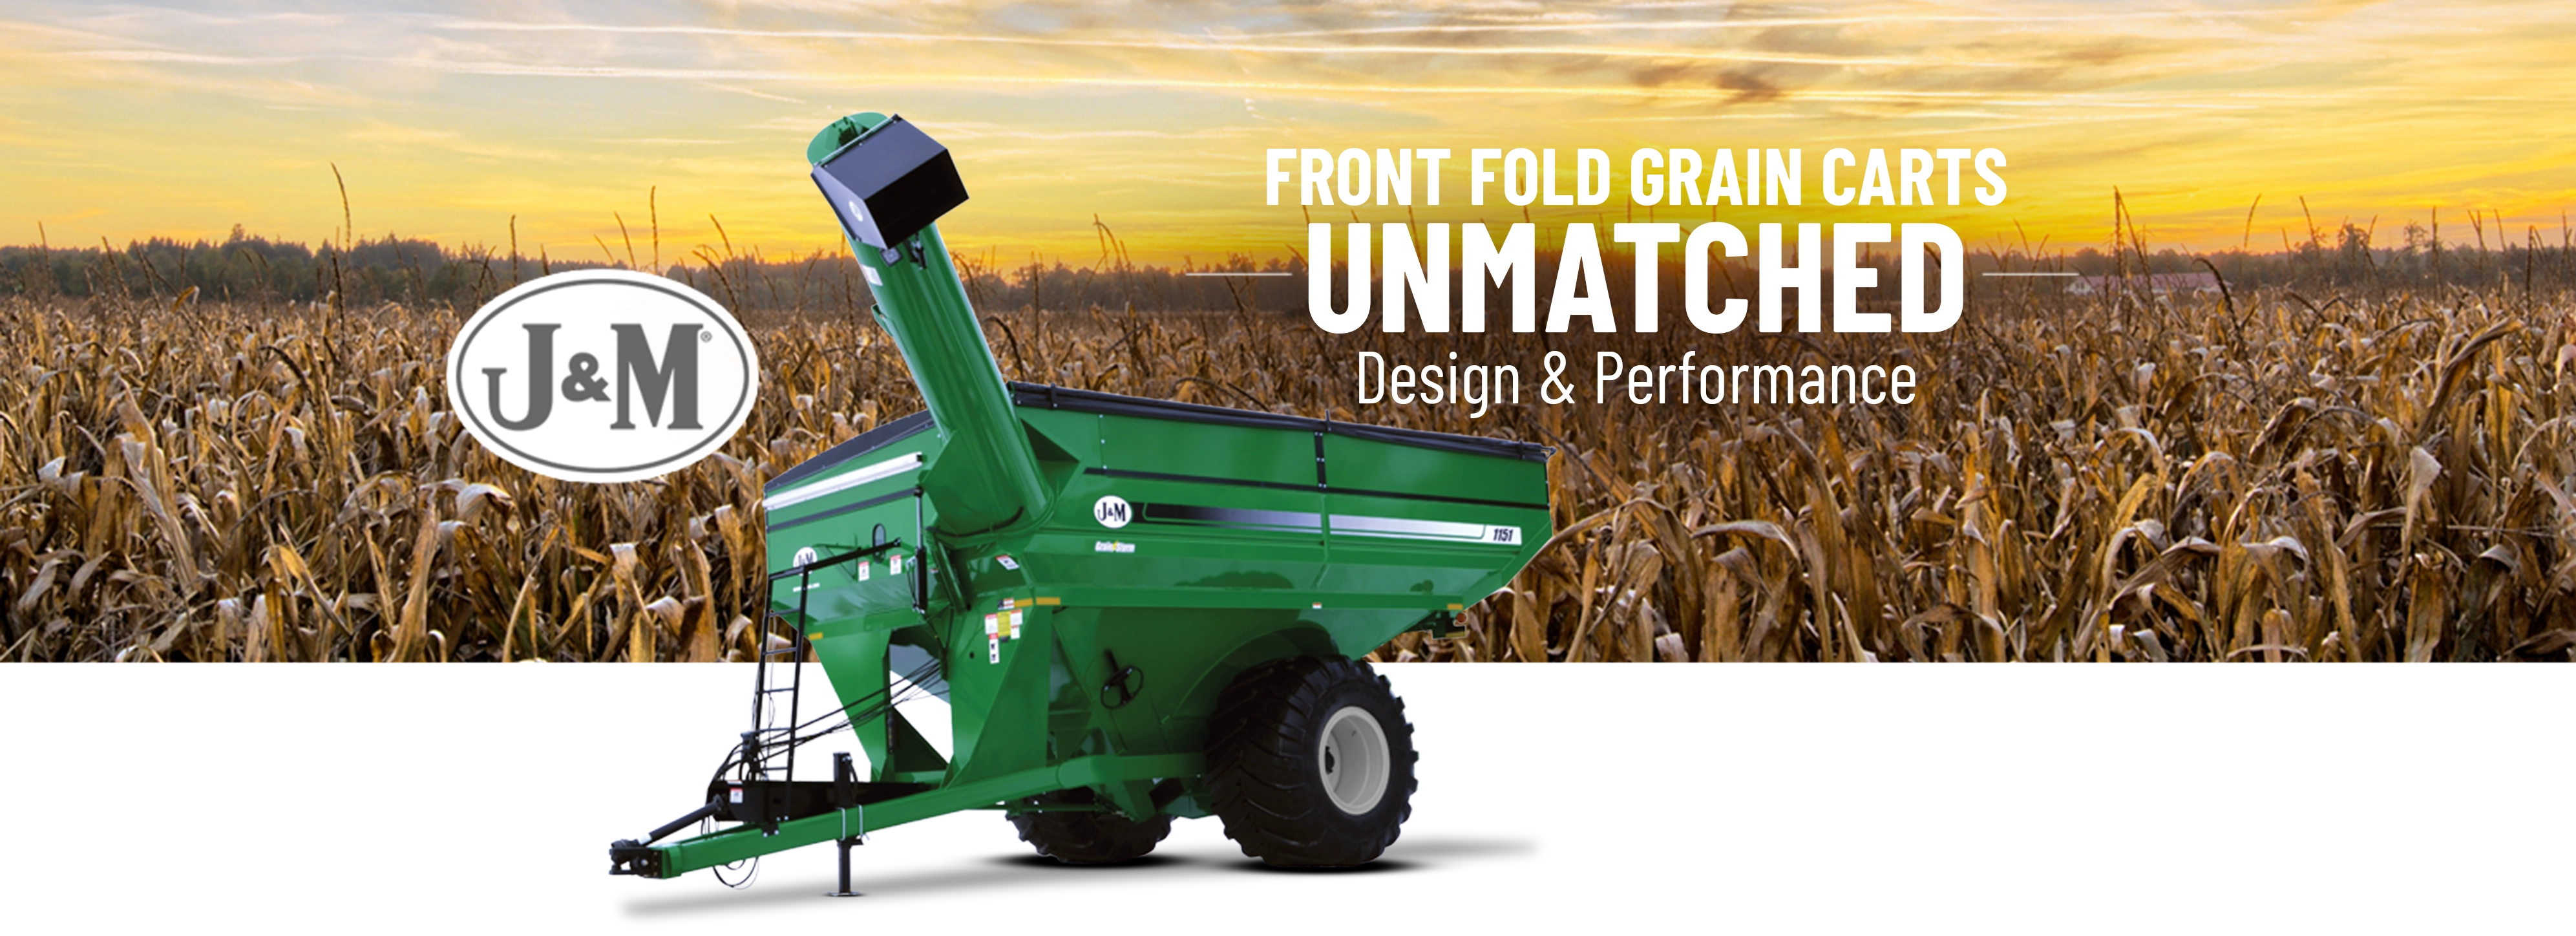 Green Grain Cart in Front of Corn Field